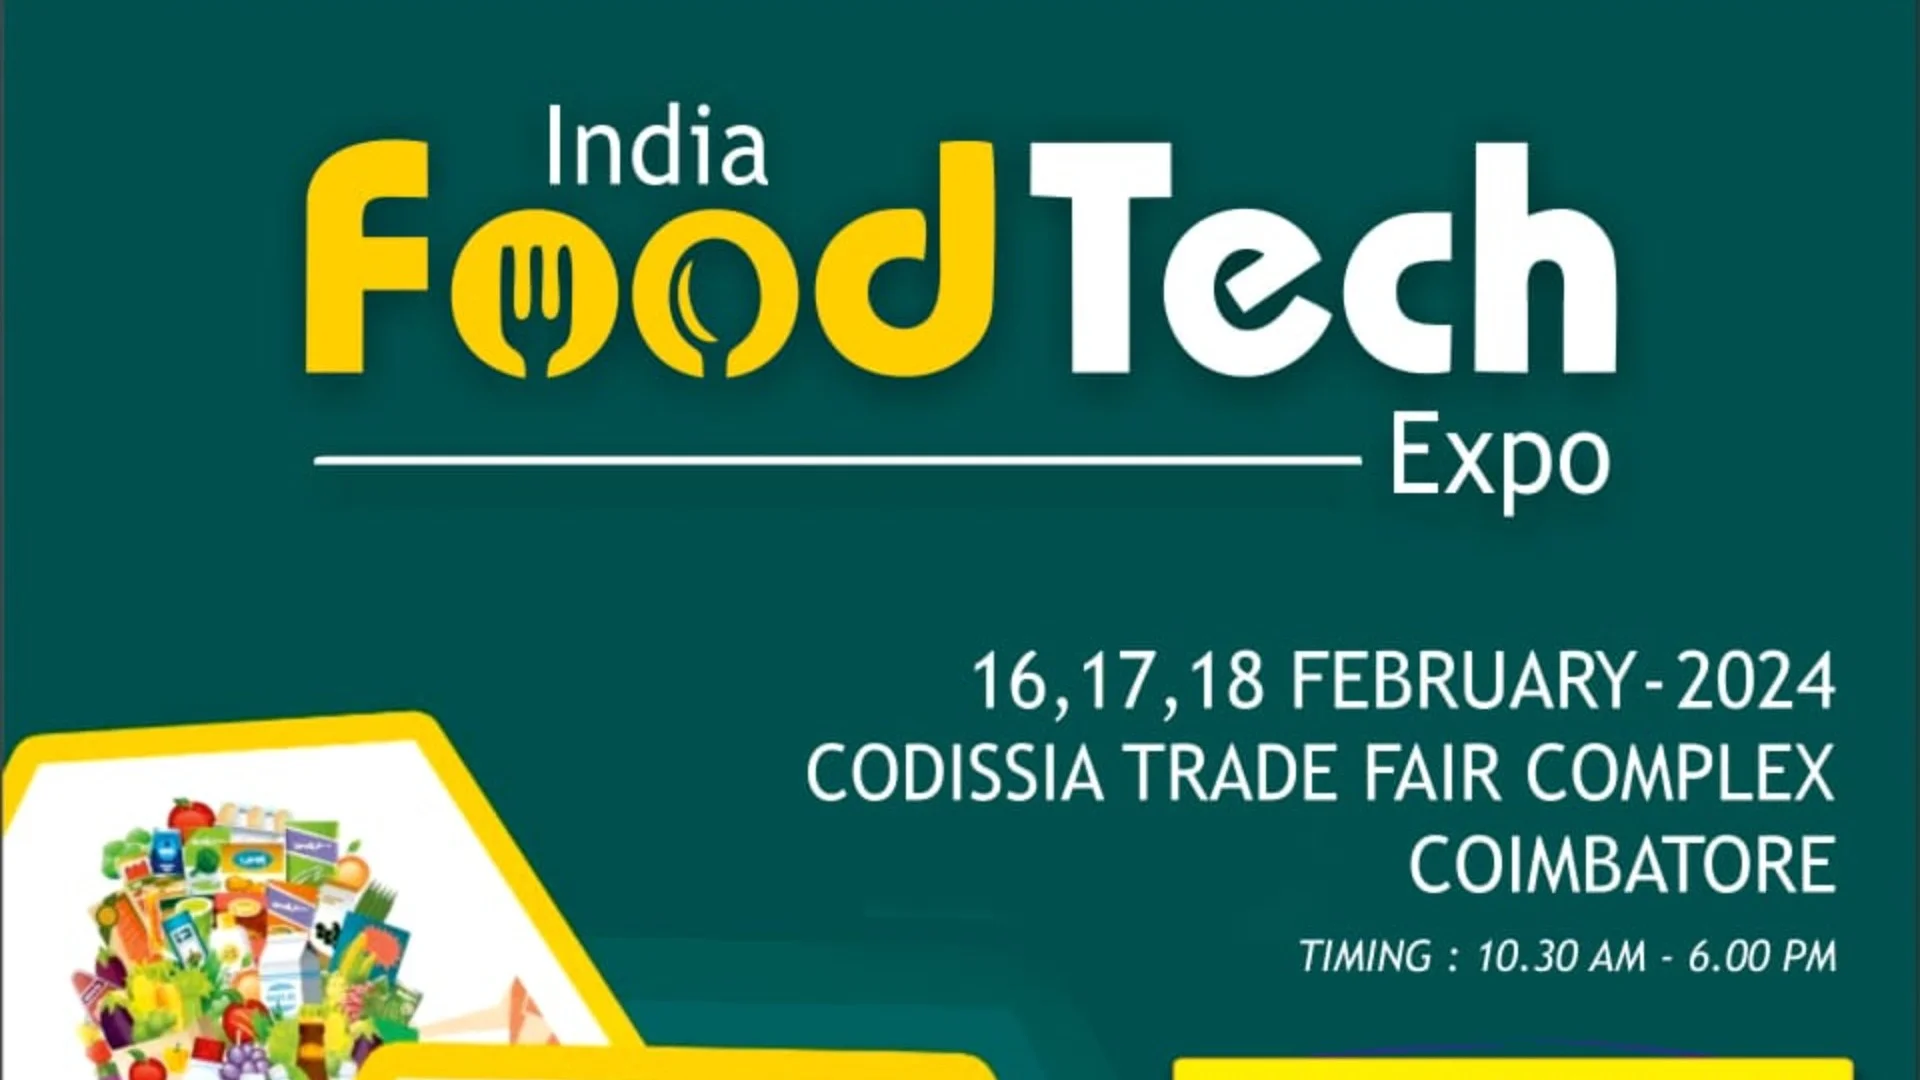 India Food Tech Expo 2024